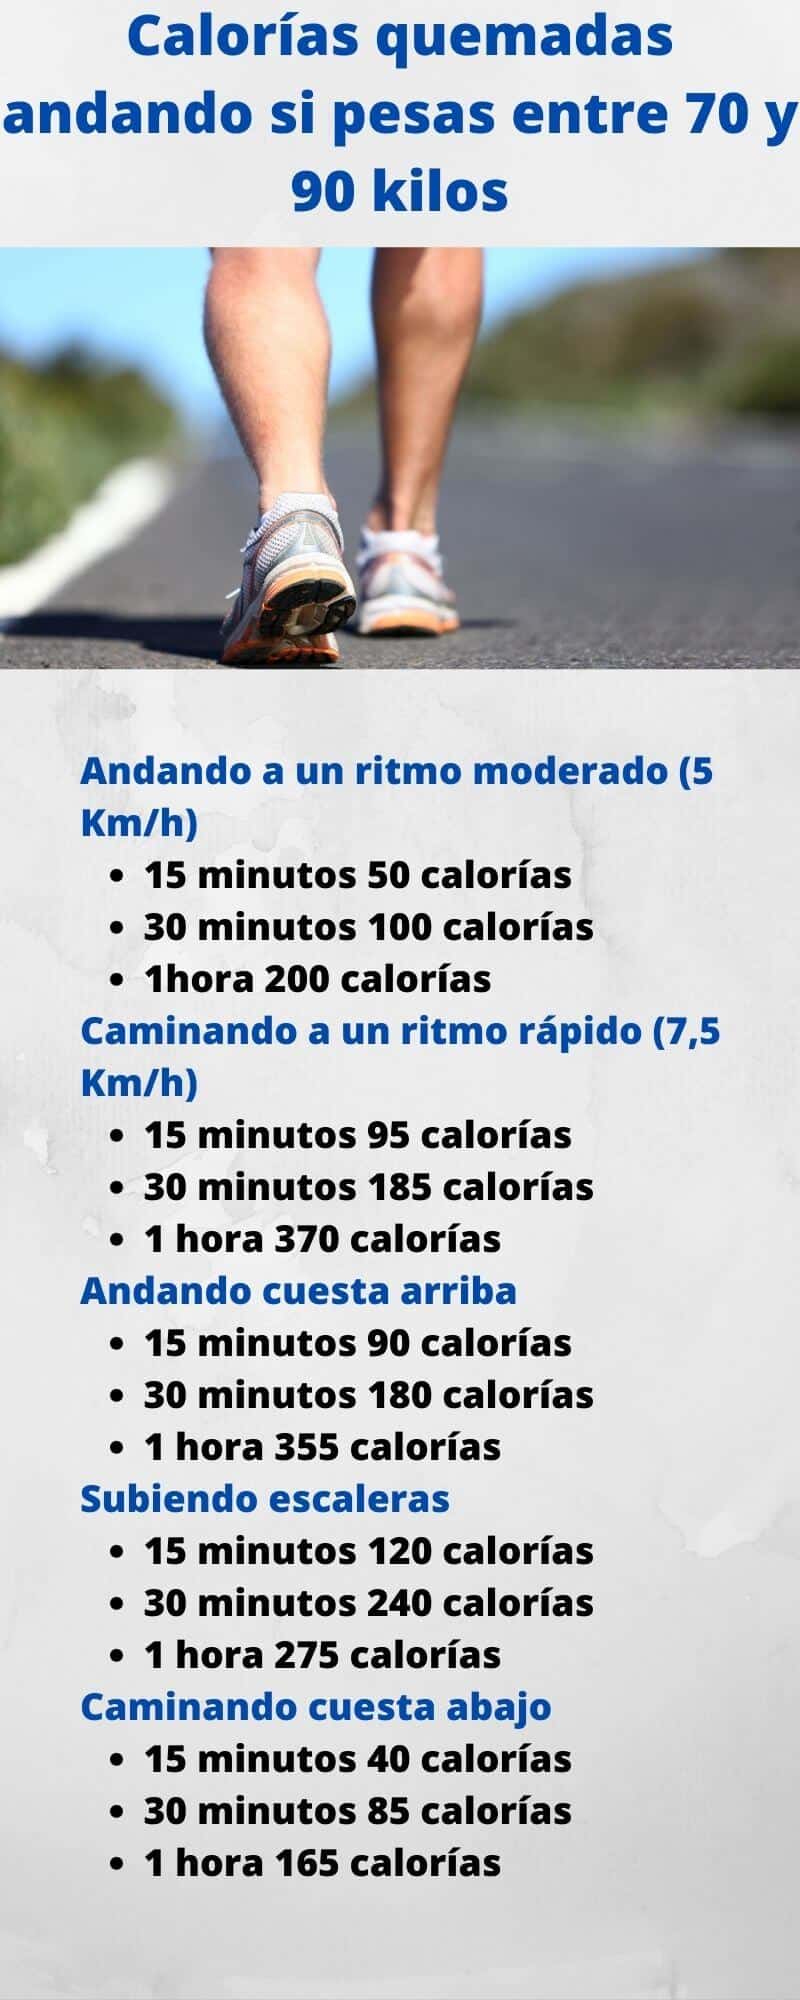 Infografia de calorías quemadas caminando para hombres de entre 70 y 90 kilos de peso